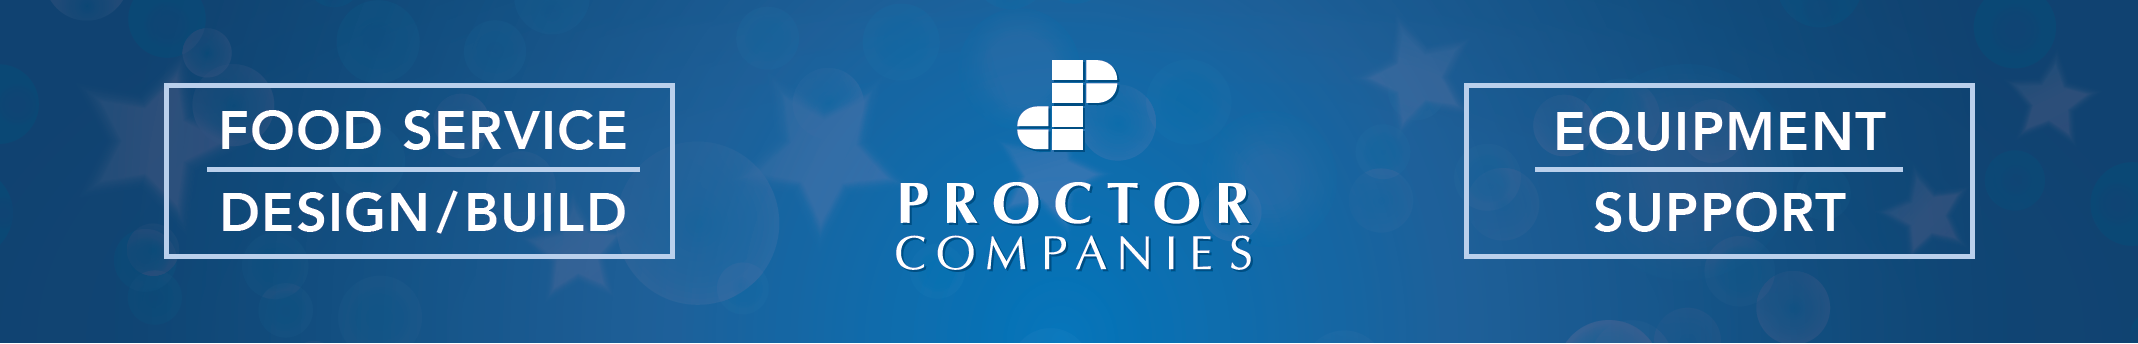 Proctor Companies